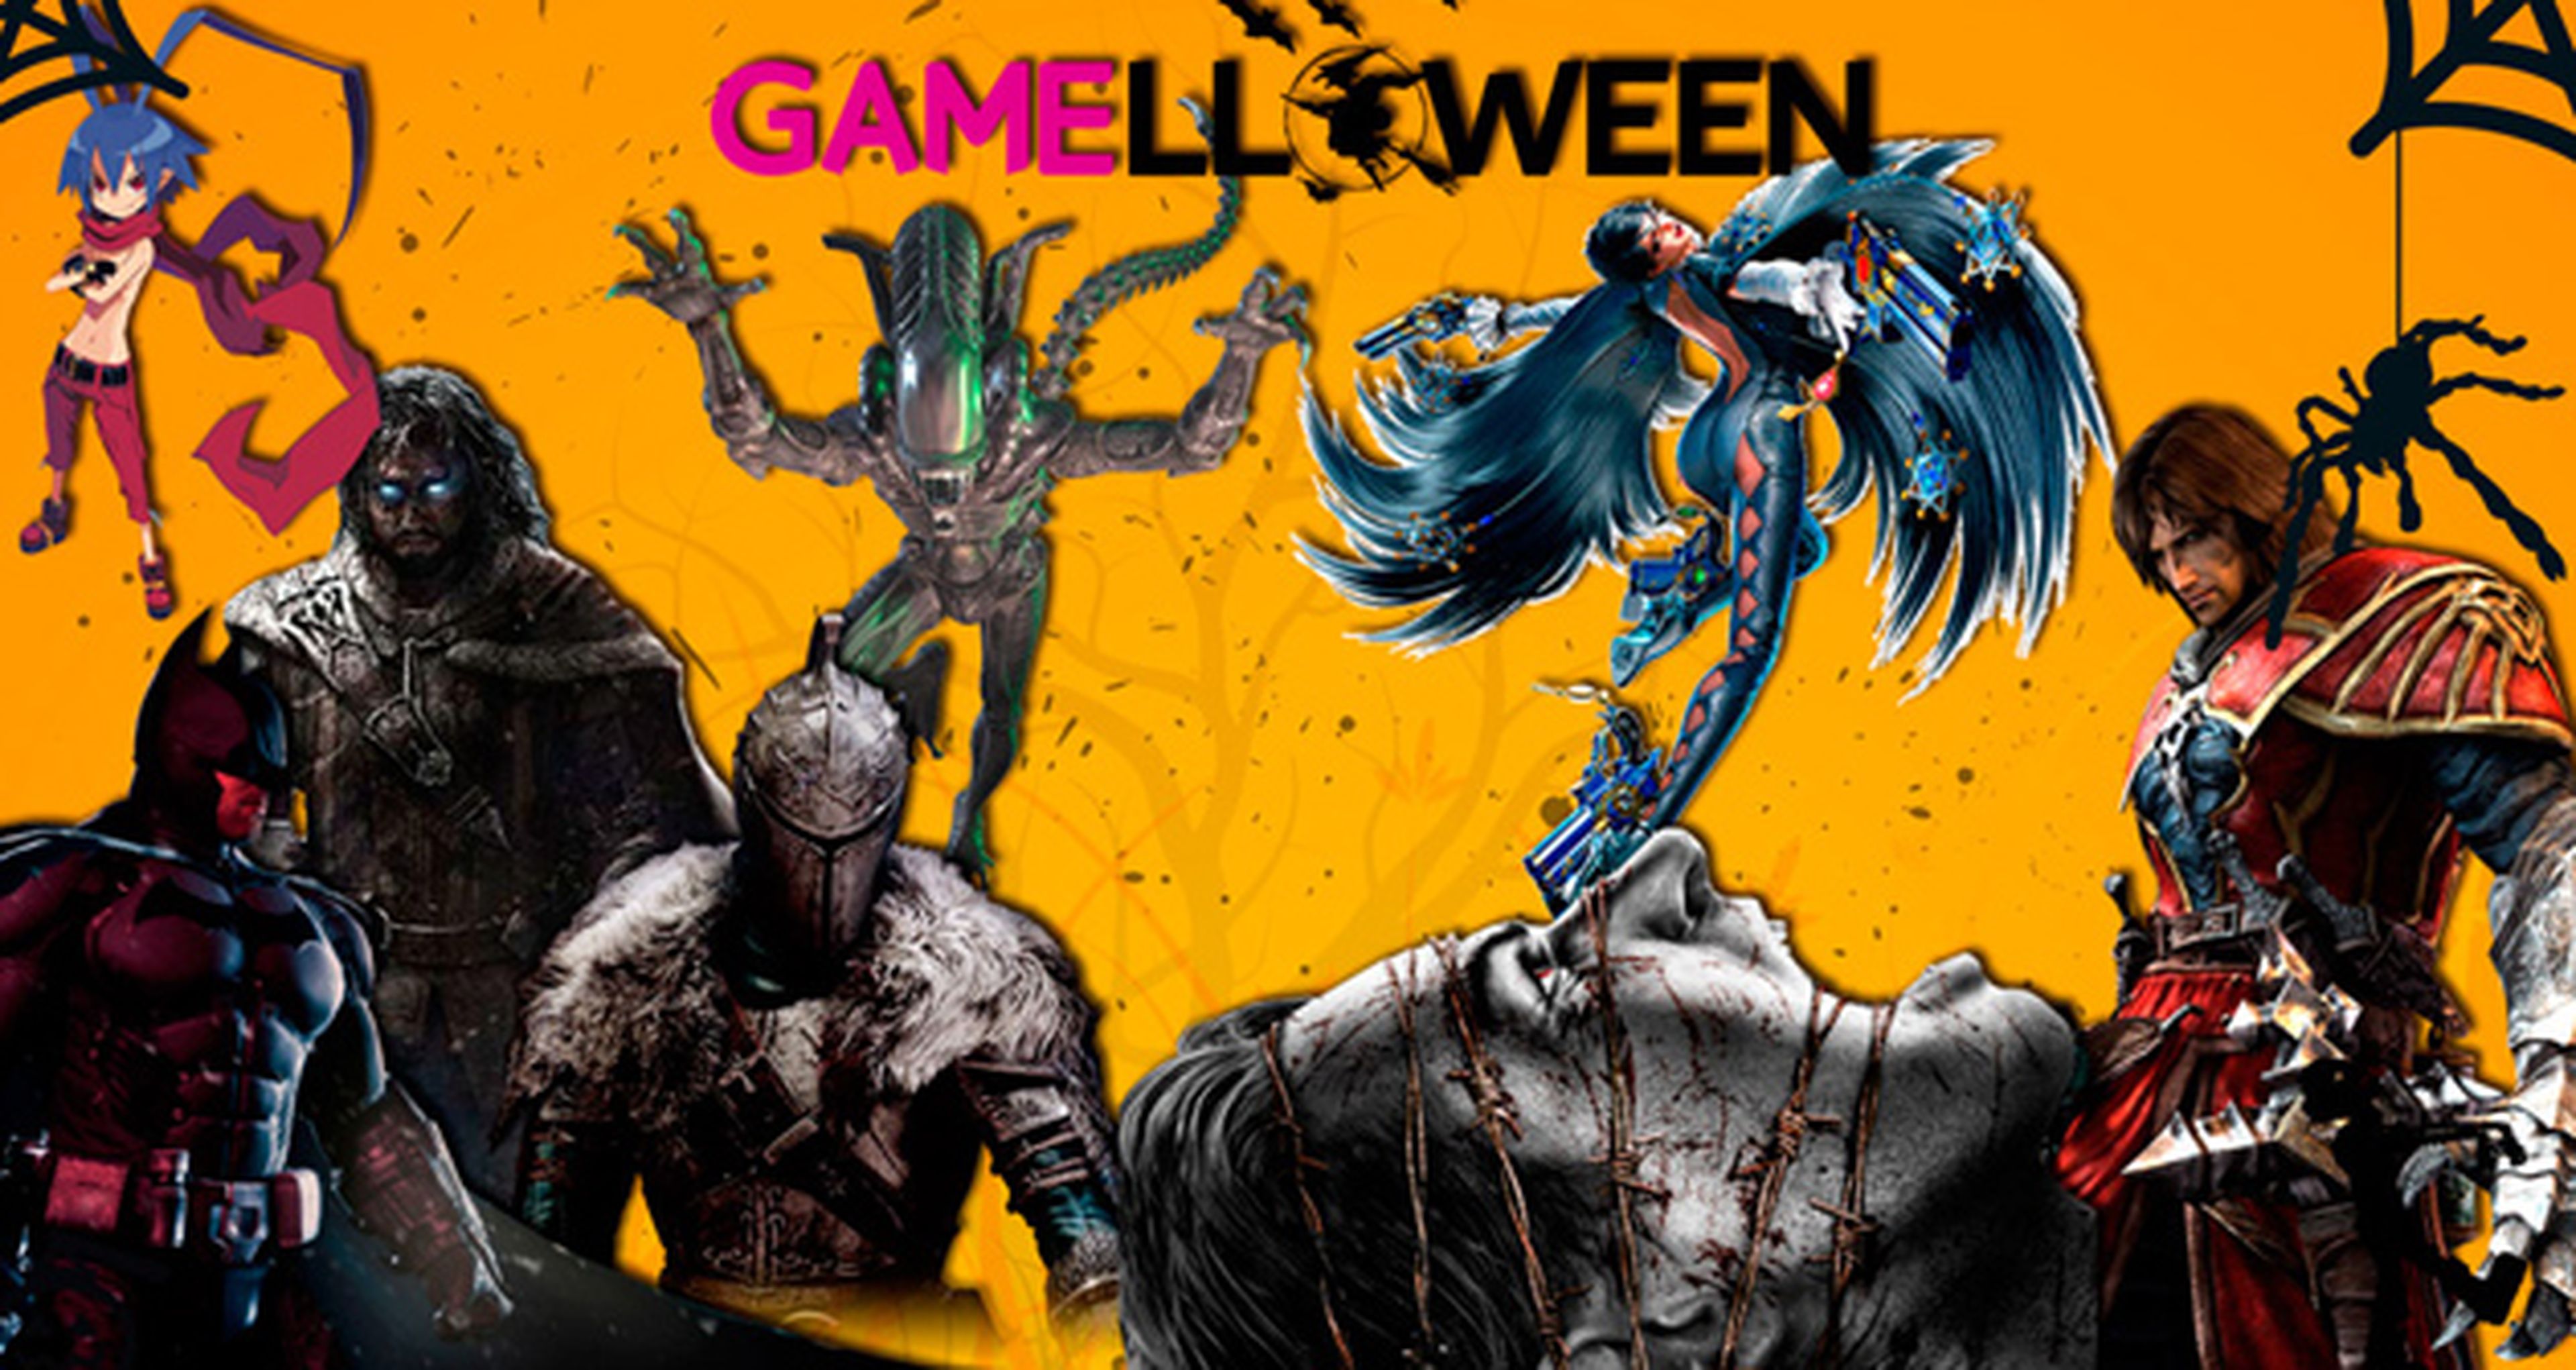 GAME celebra Halloween con ofertas especiales